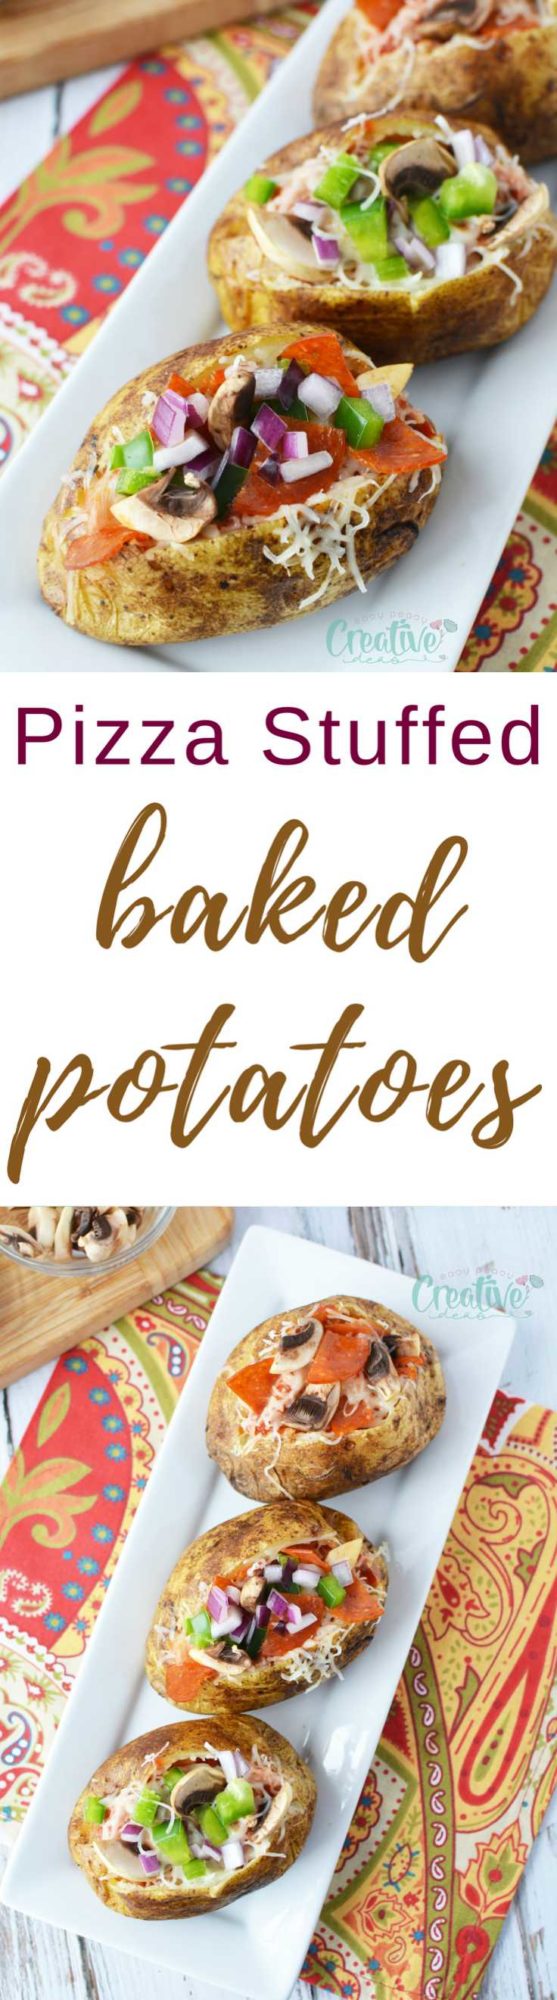 Pizza stuffed baked potatoes